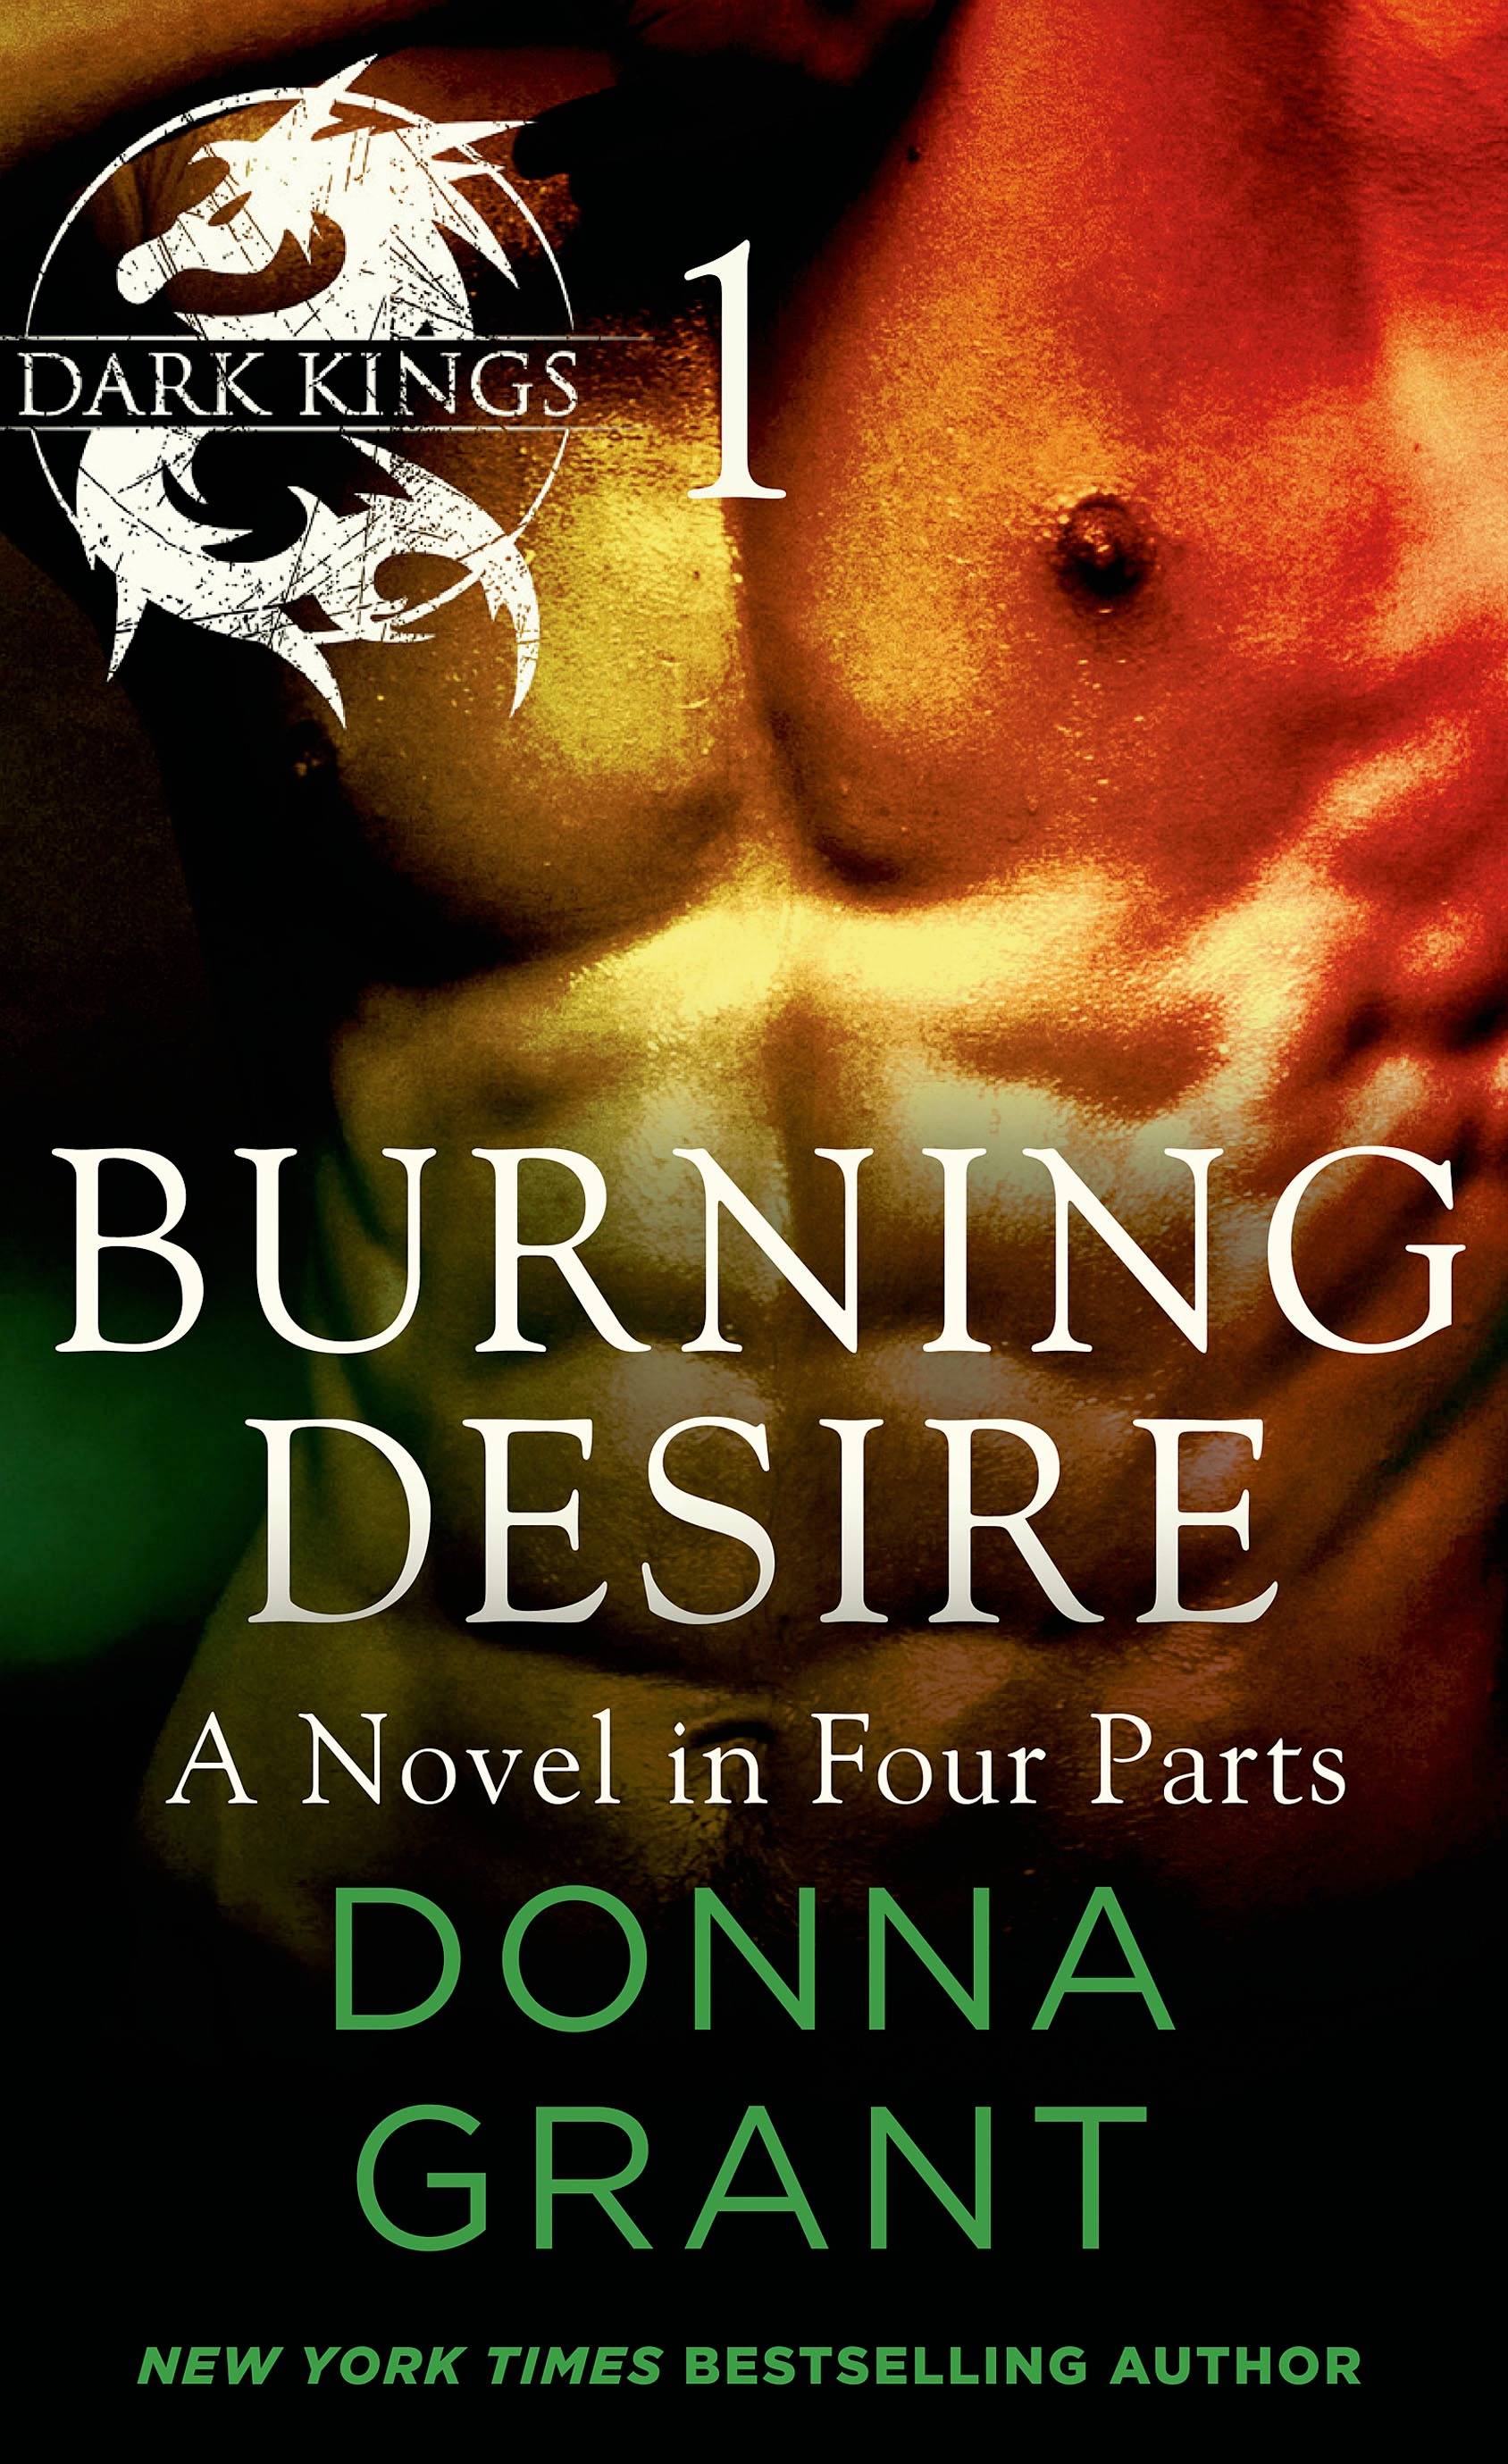 Burning desires